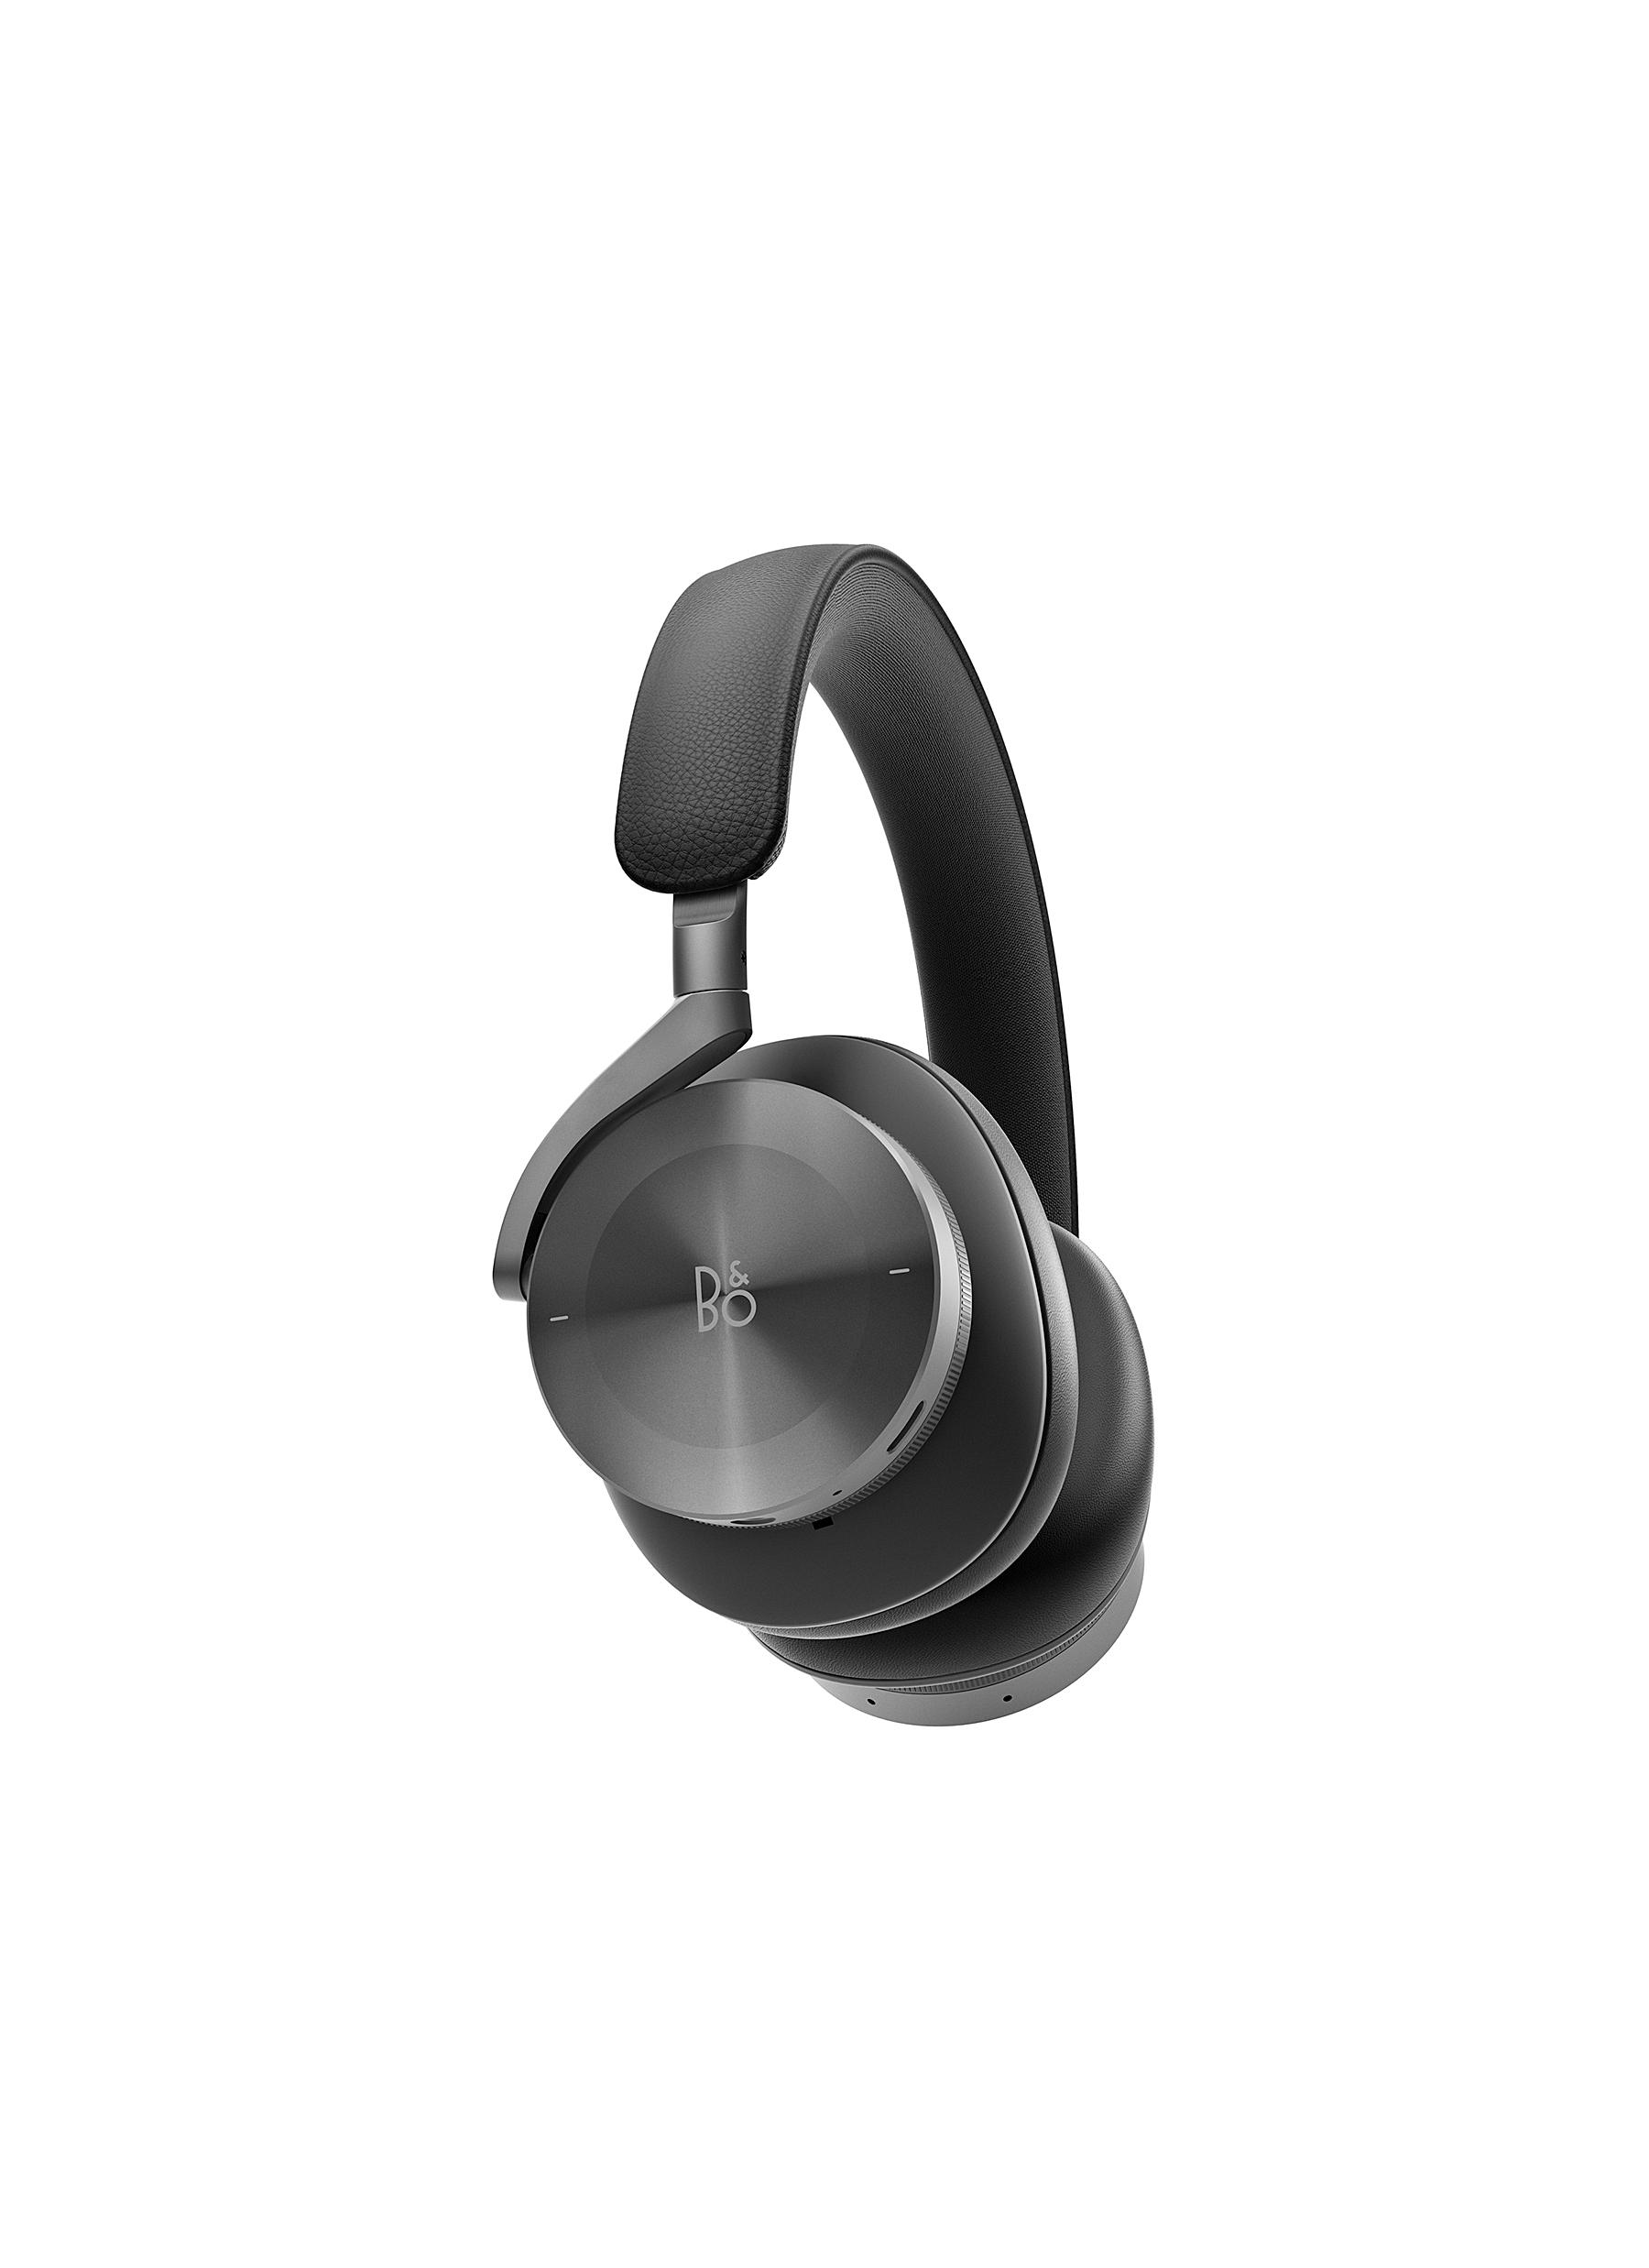 BANG & OLUFSEN | BEOPLAY H95耳罩式蓝牙耳机－黑色 | Lane Crawford - 流行品牌网上商城